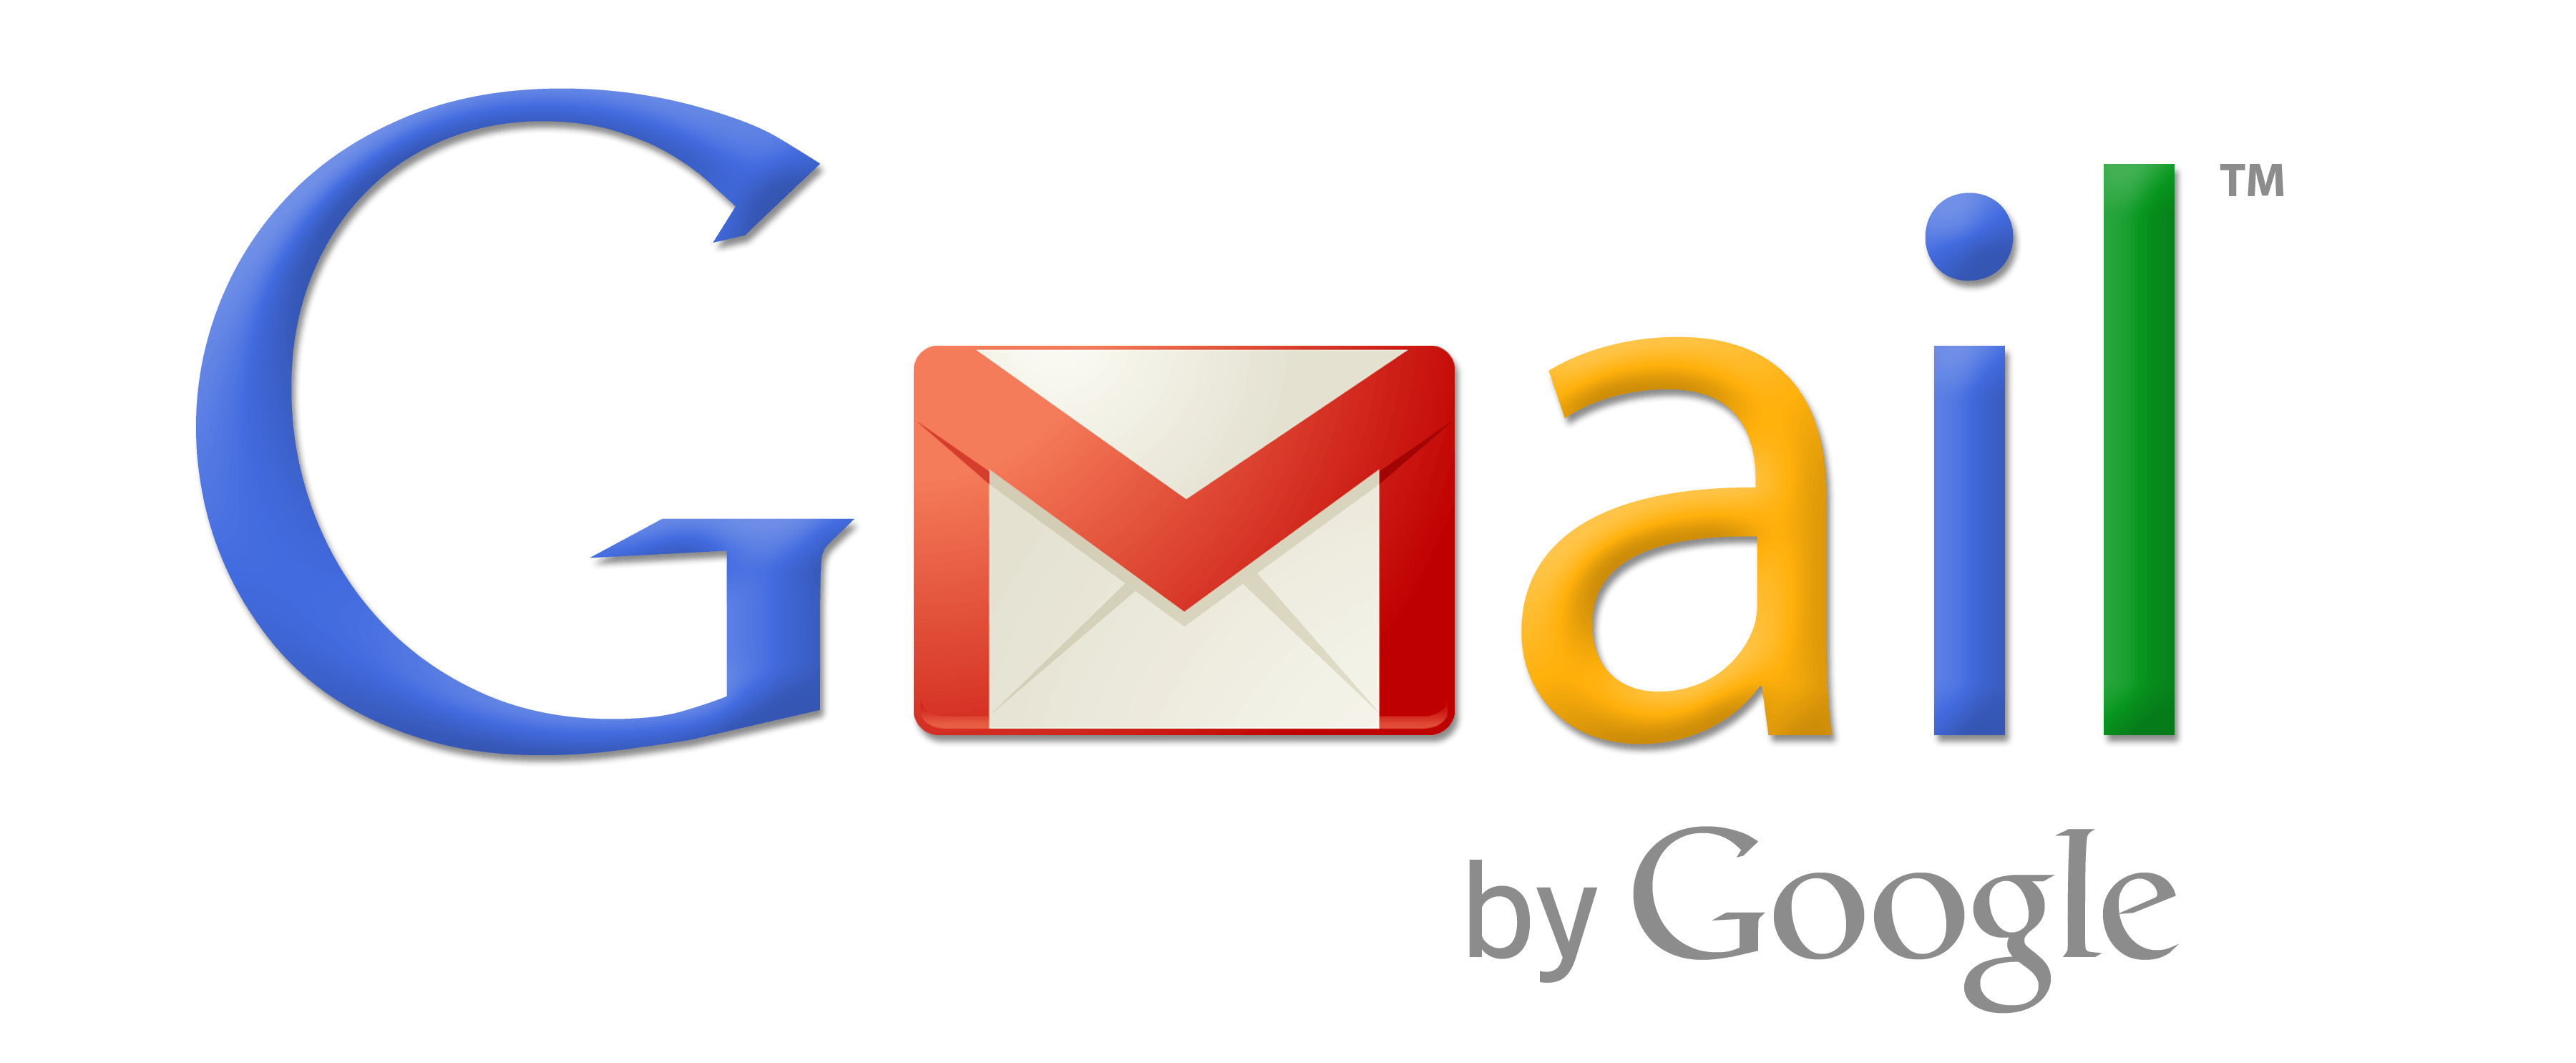 Google Account Logo - Gmail logo.png